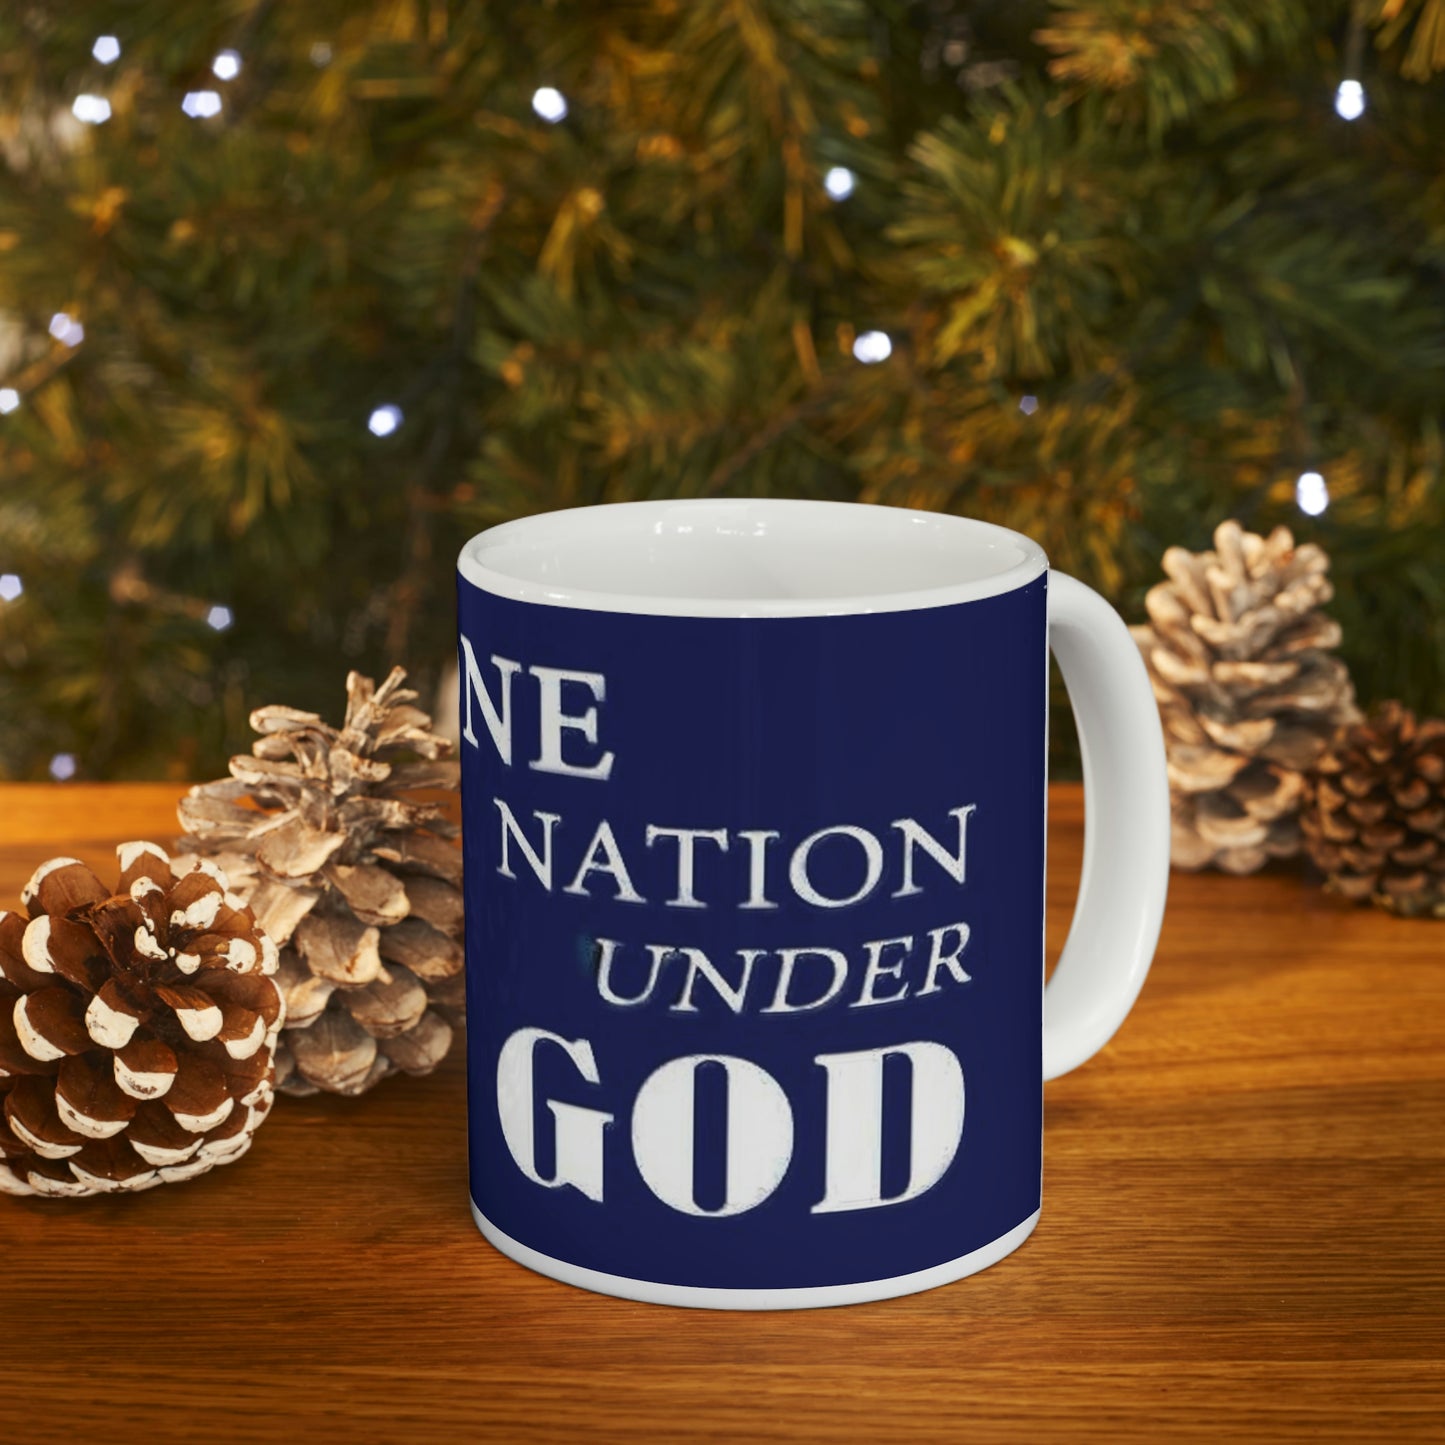 One Nation Under God Ceramic Mug 11oz